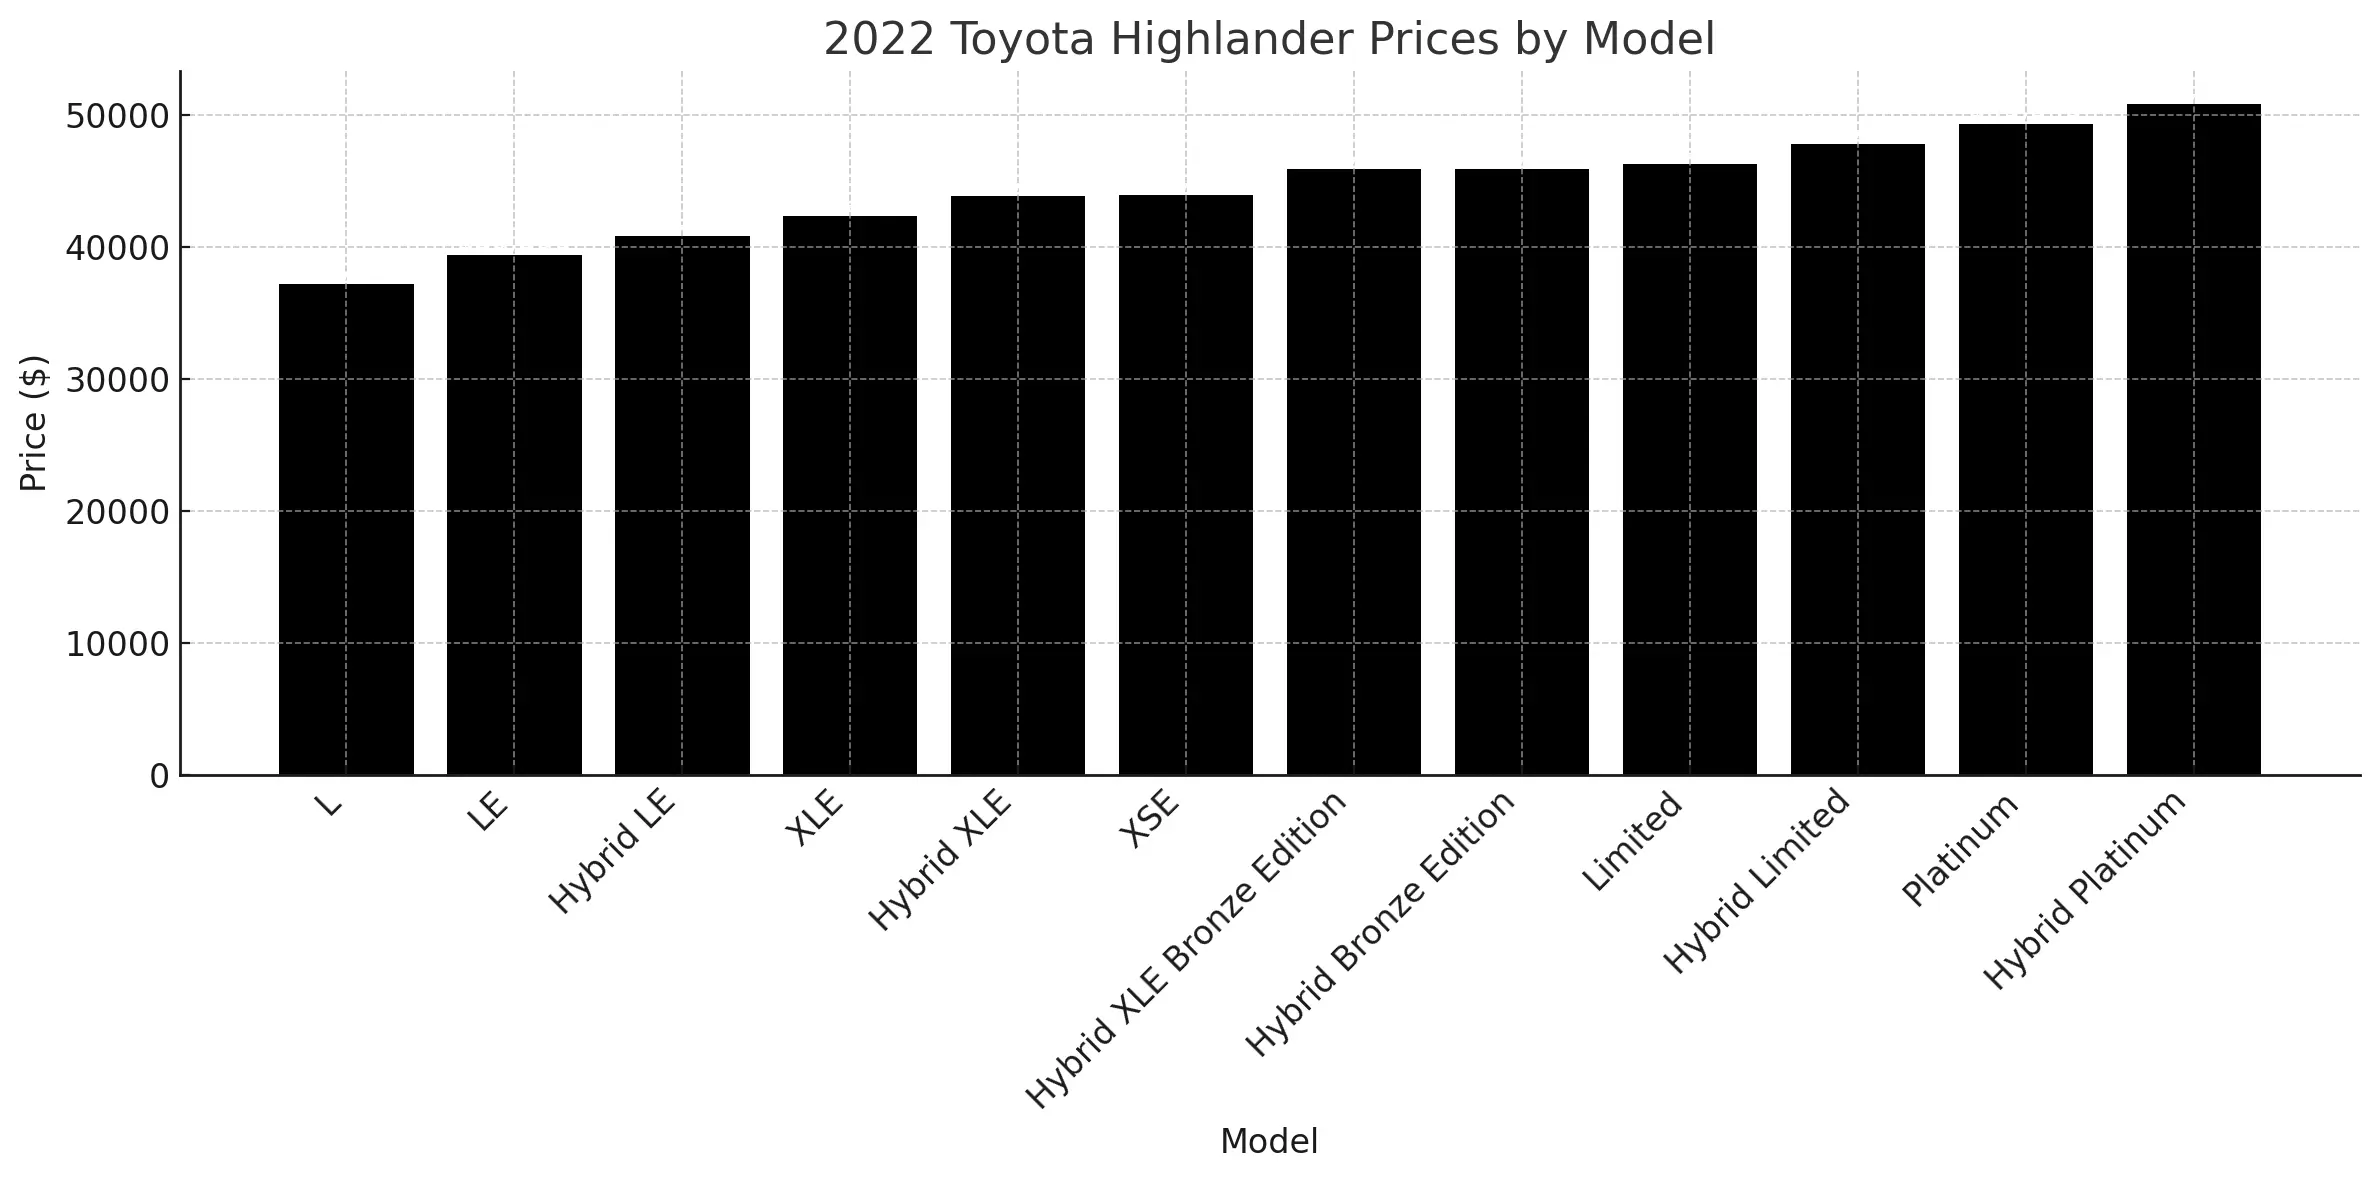 2022 Toyota Highlander Price